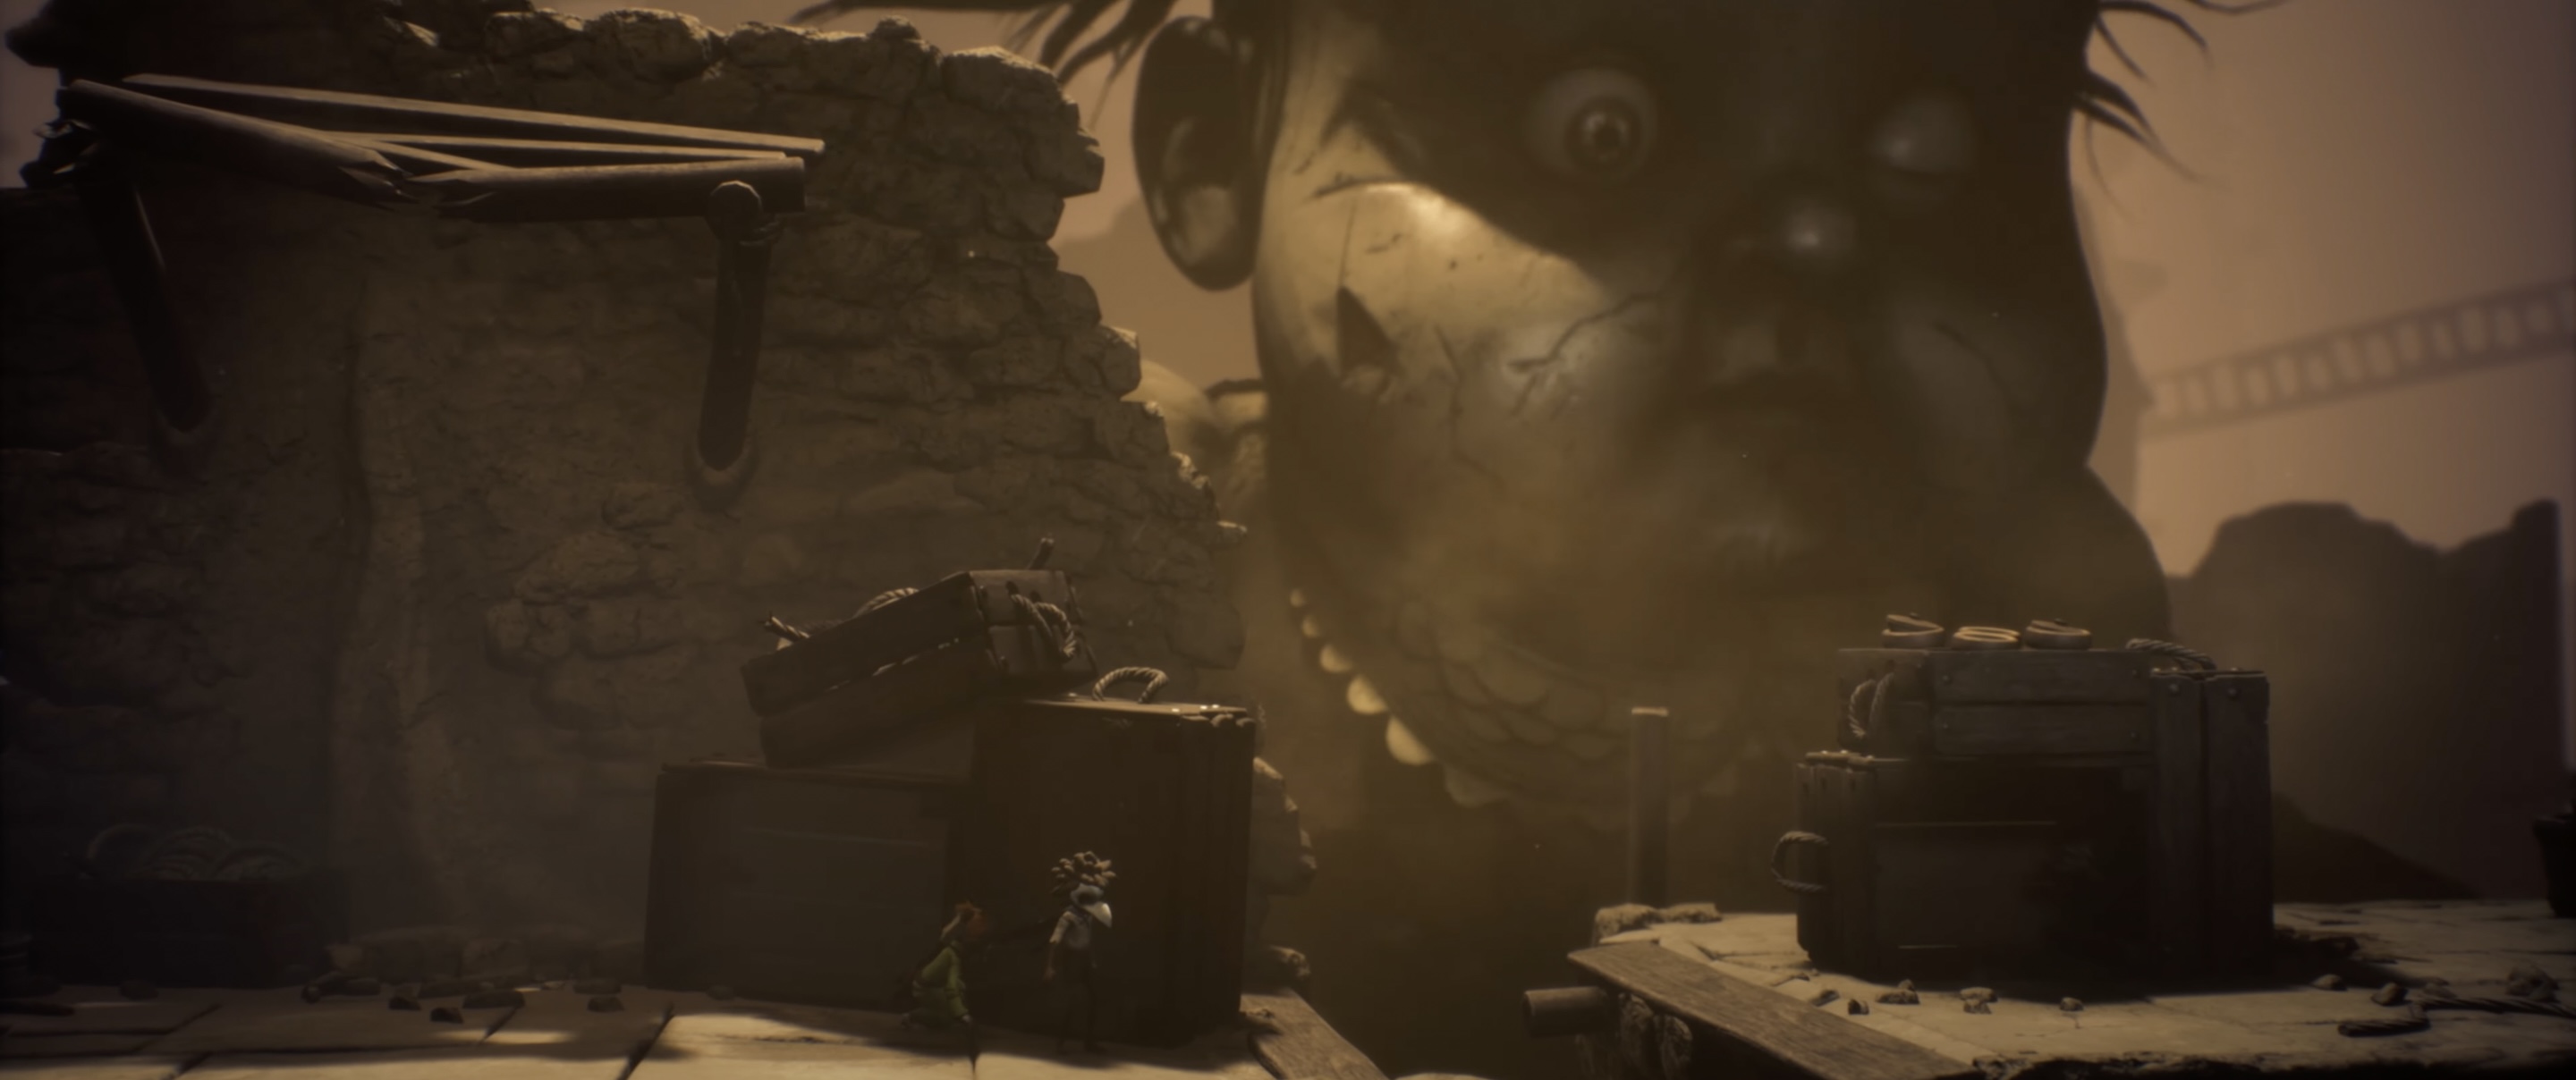 Little Nightmares III Revealed at Gamescom Opening Night Live